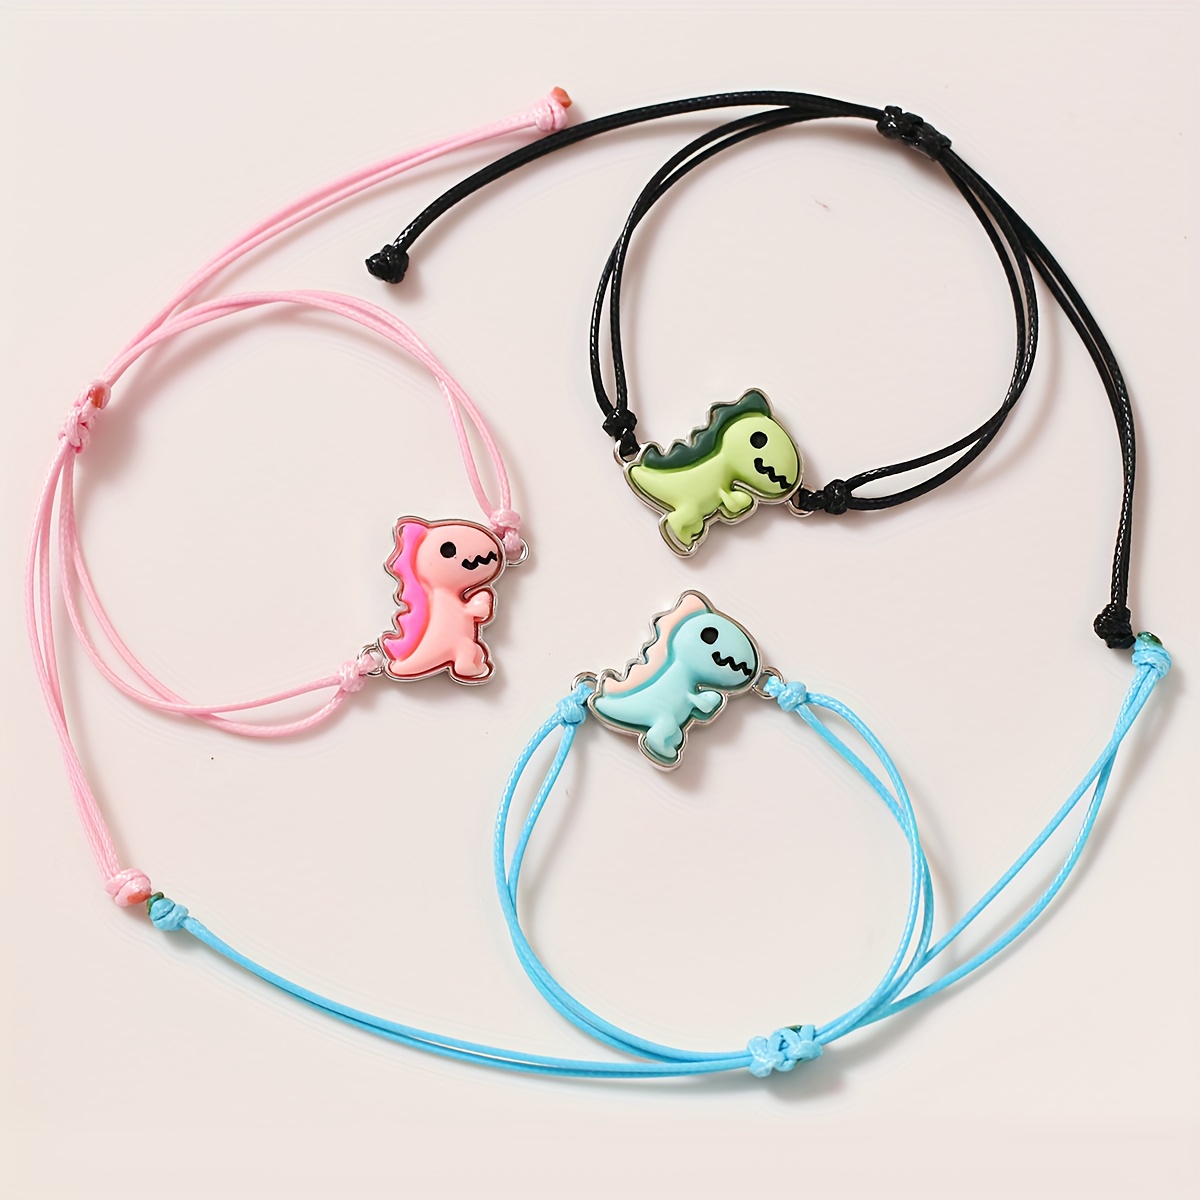 Rope Wristband/thin String Bracelet/waterproof Adjustable String  Bracelet/unisex Kids Bracelet/friendship Bracelet 